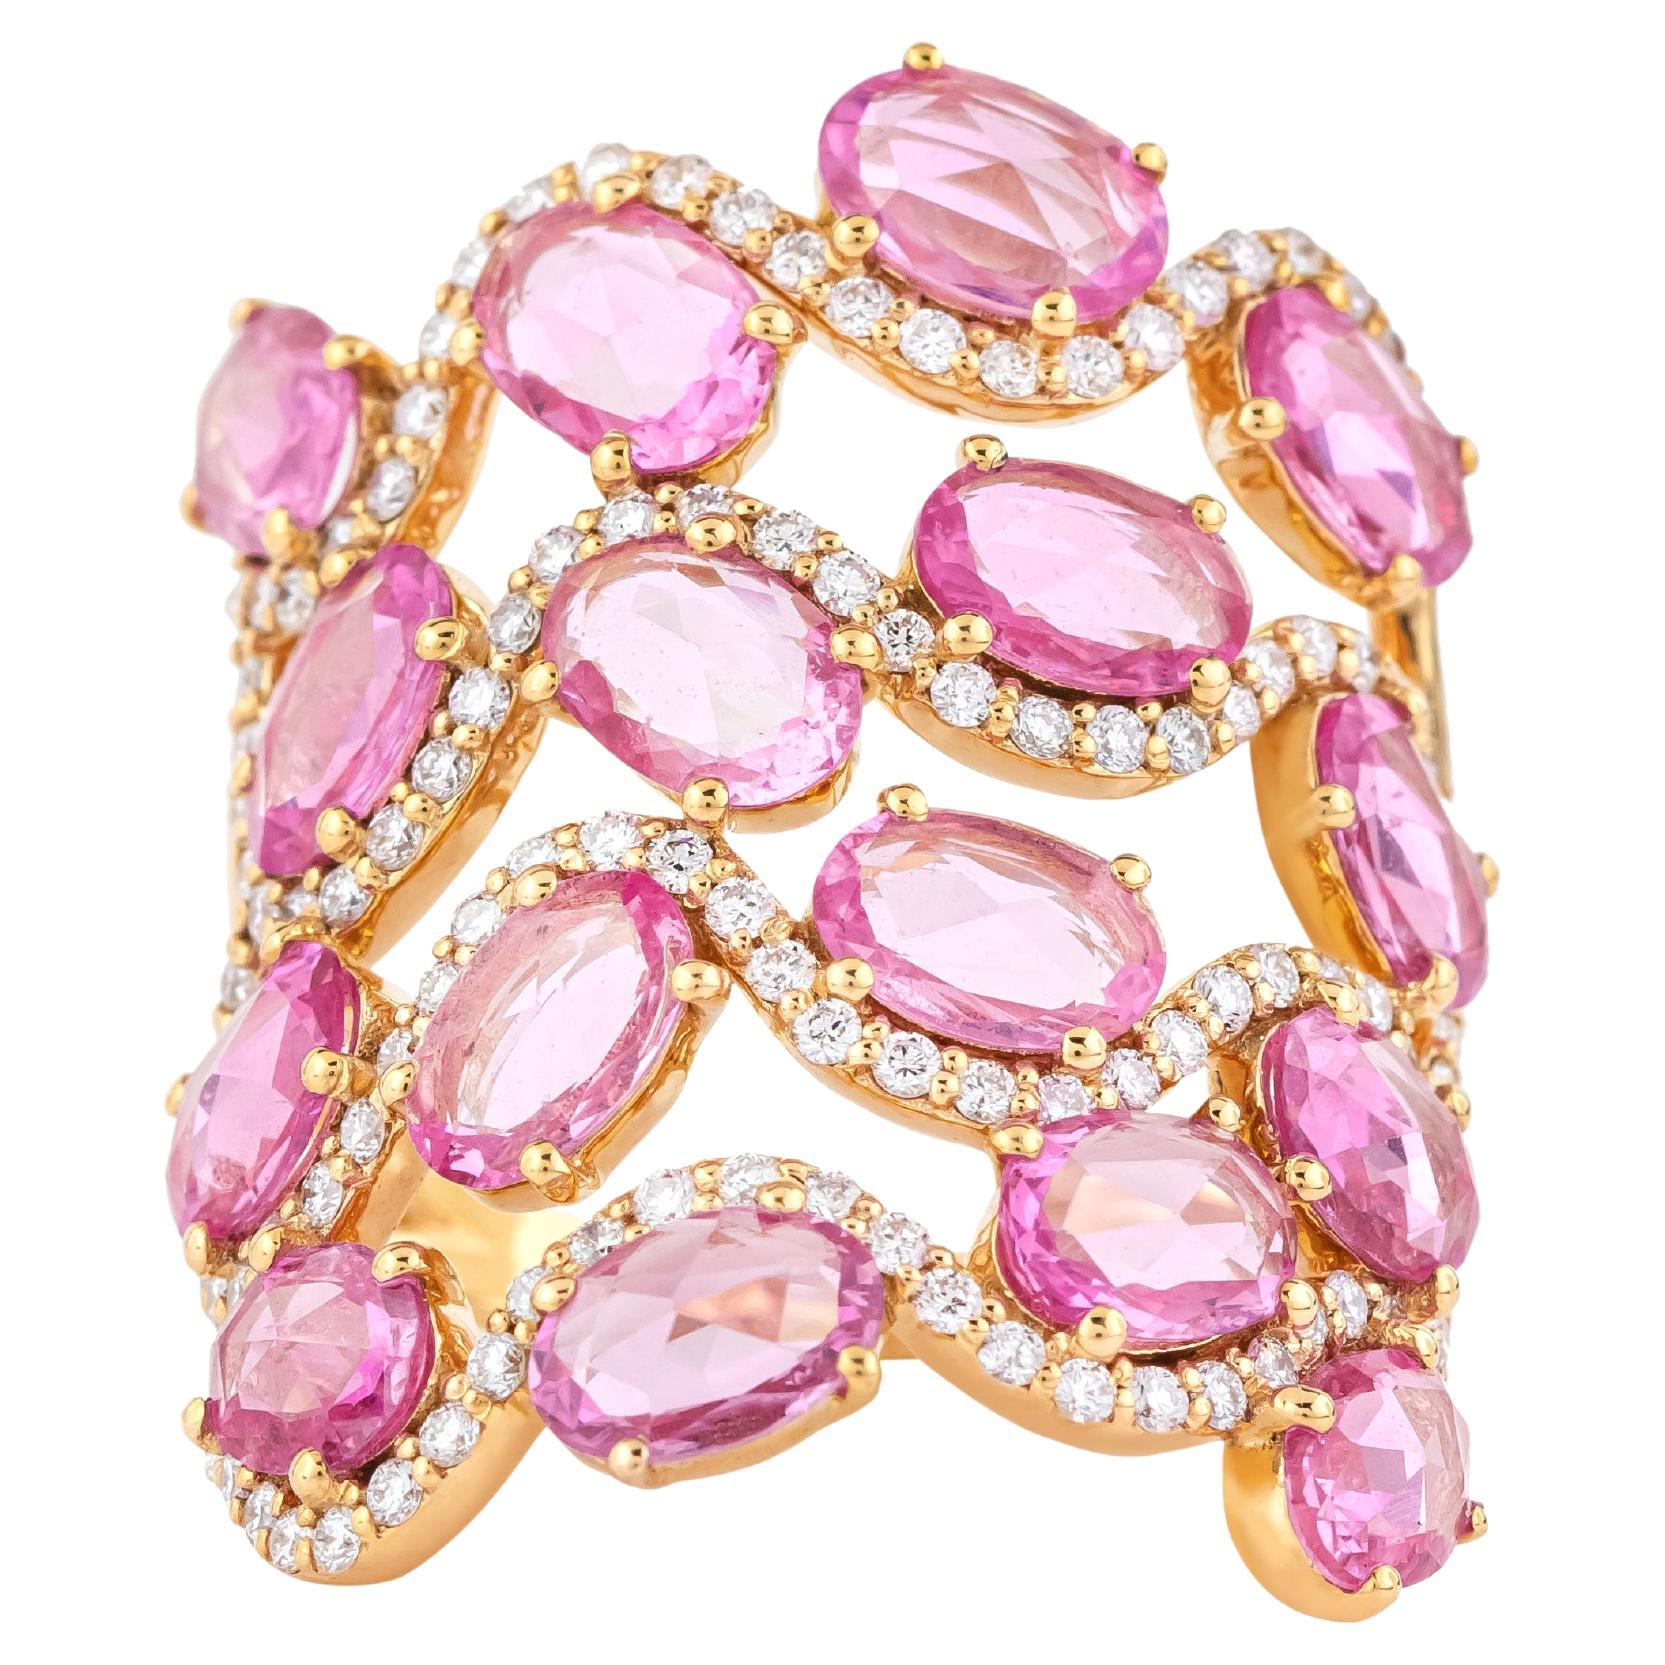 18 Karat Gold 6.1 Carat Diamond and Pink Sapphire Statement Ring For Sale